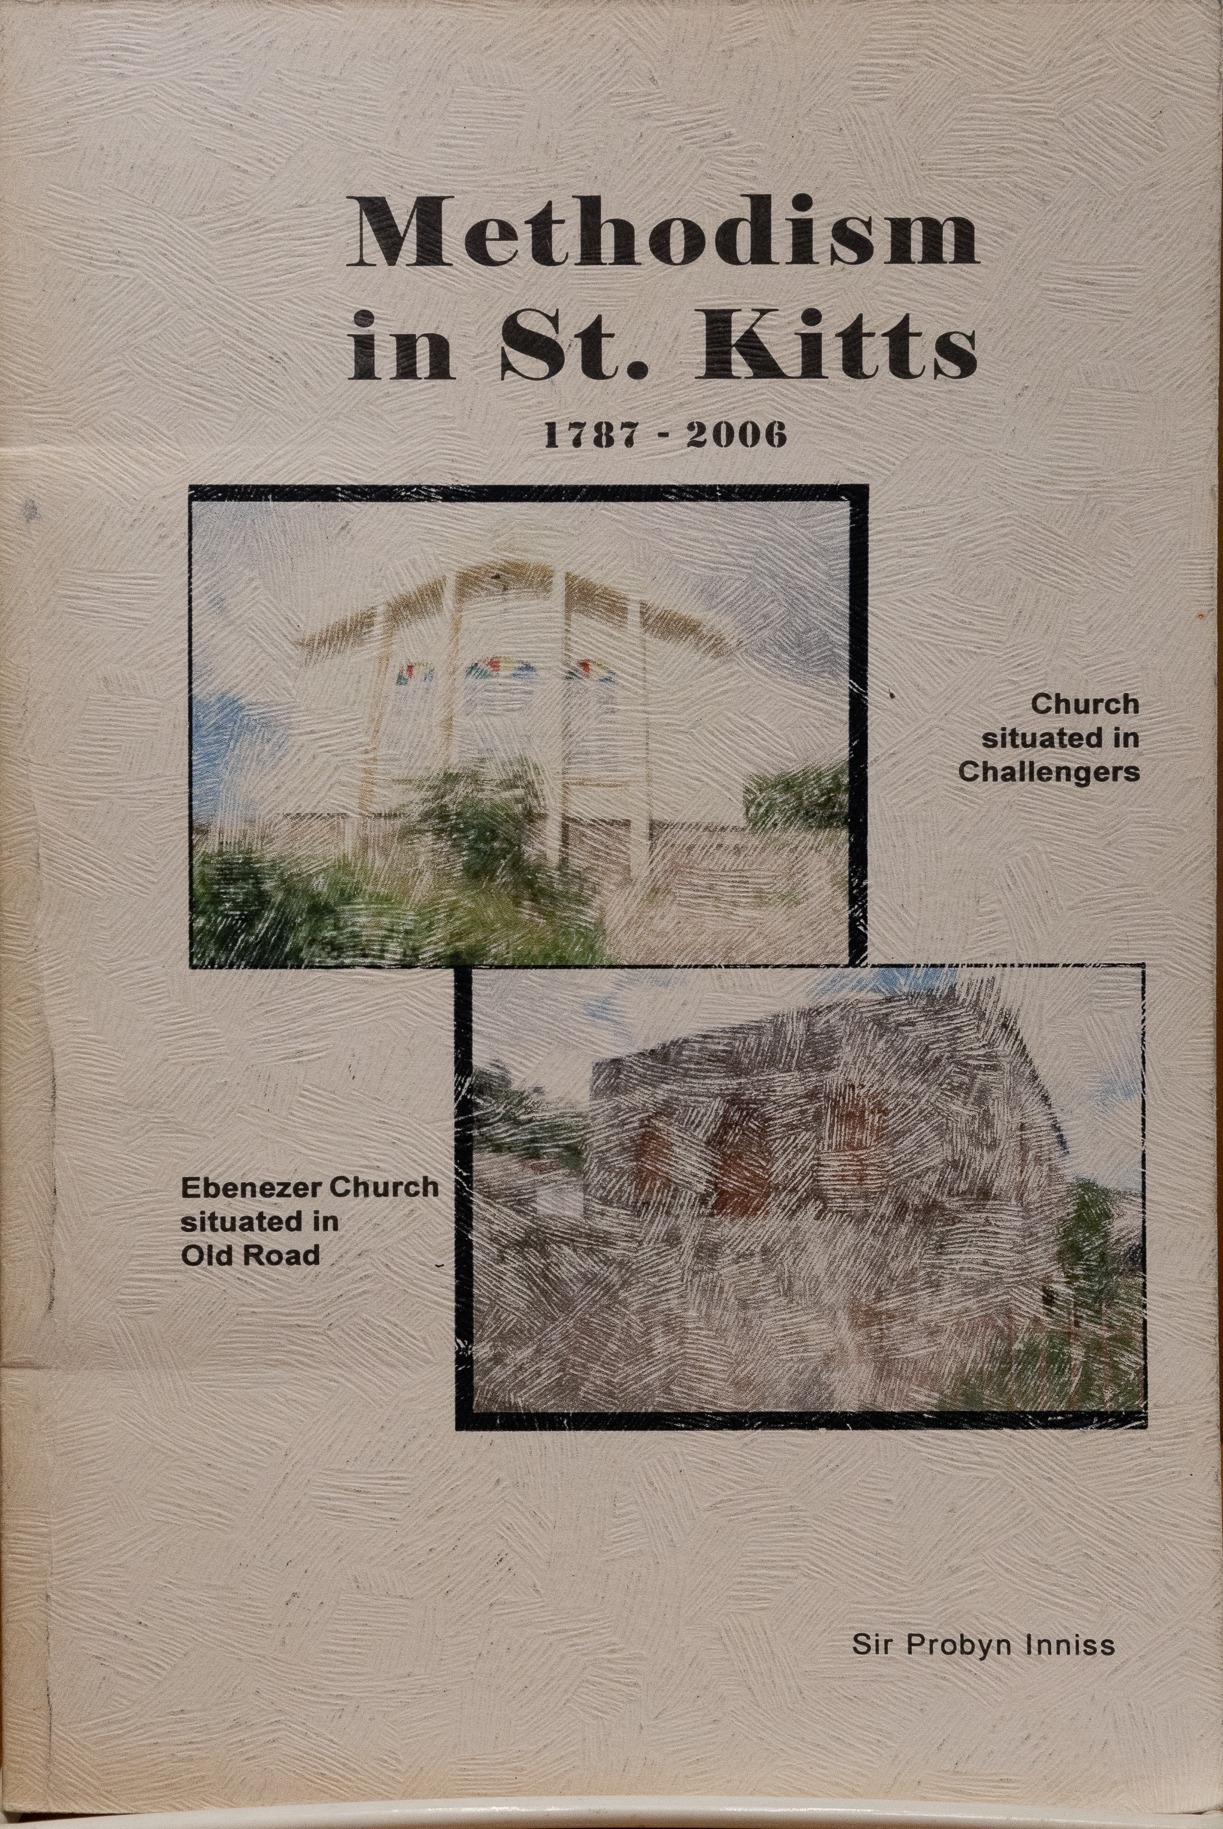 Methodism in St. Kitts 1787-2006